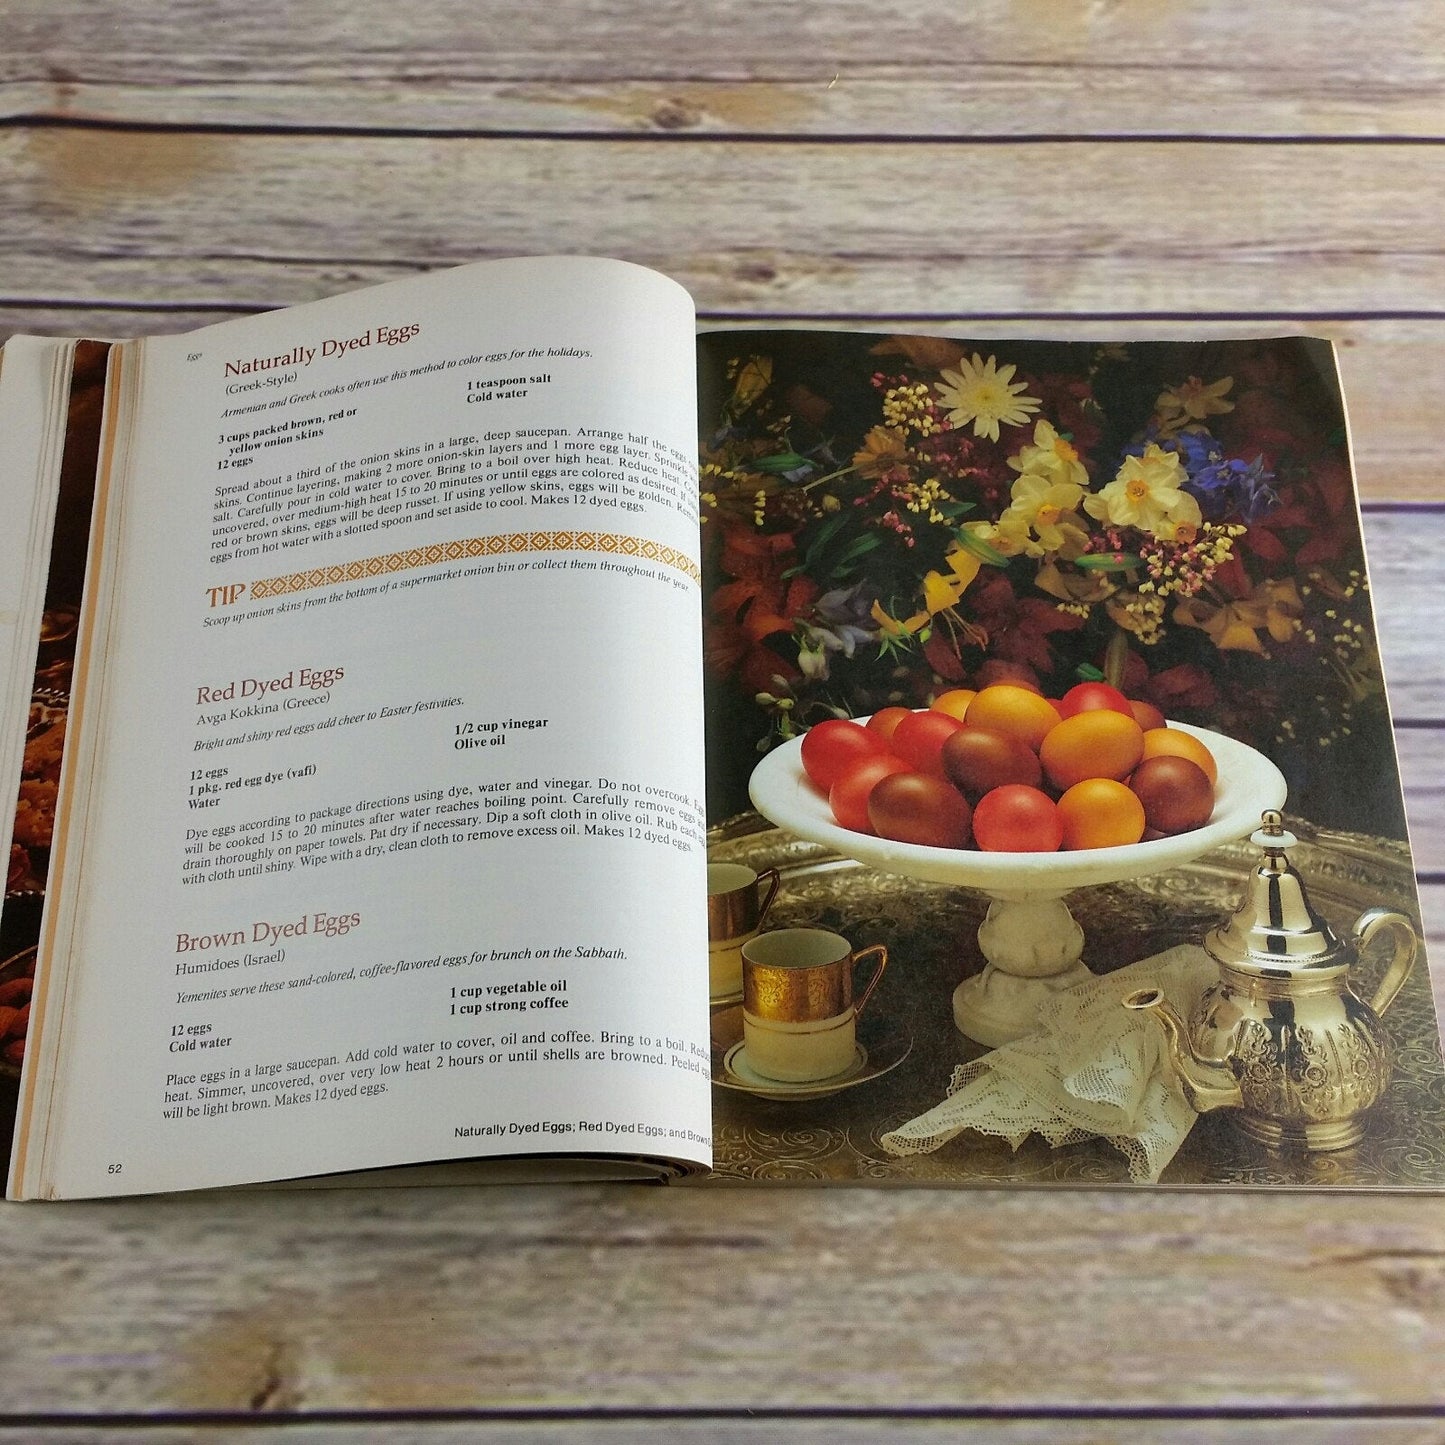 Vintage Cookbook Middle Eastern Cooking HP Books Rose Dosti 1982 Paperback Book Cuisines Holiday Foods Desserts